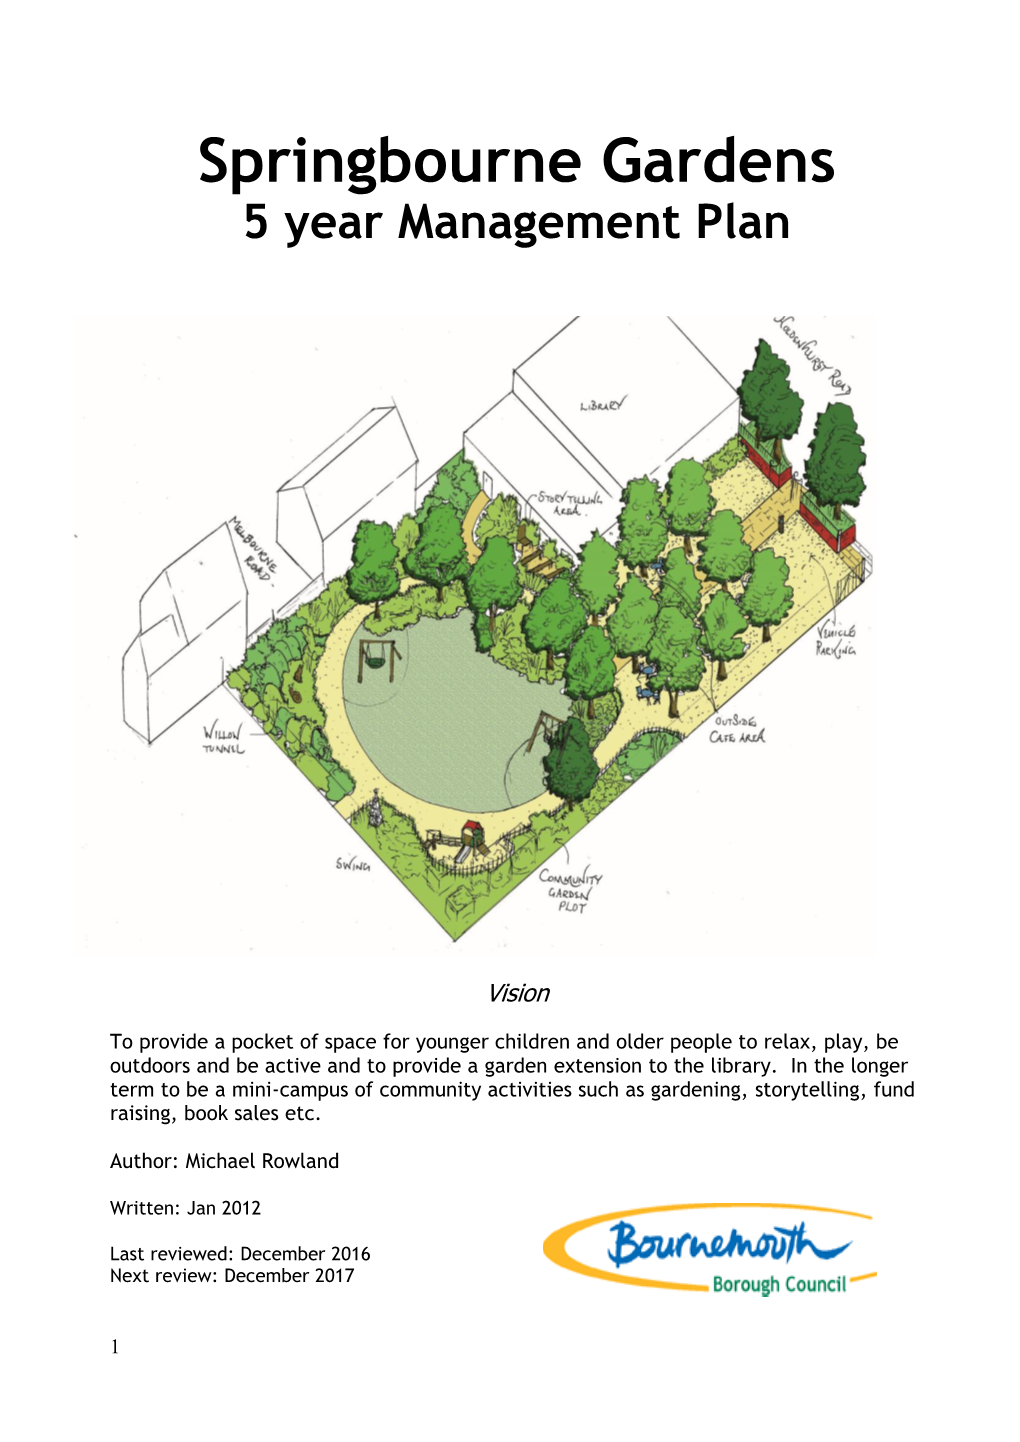 Springbourne Gardens Management Plan 2012